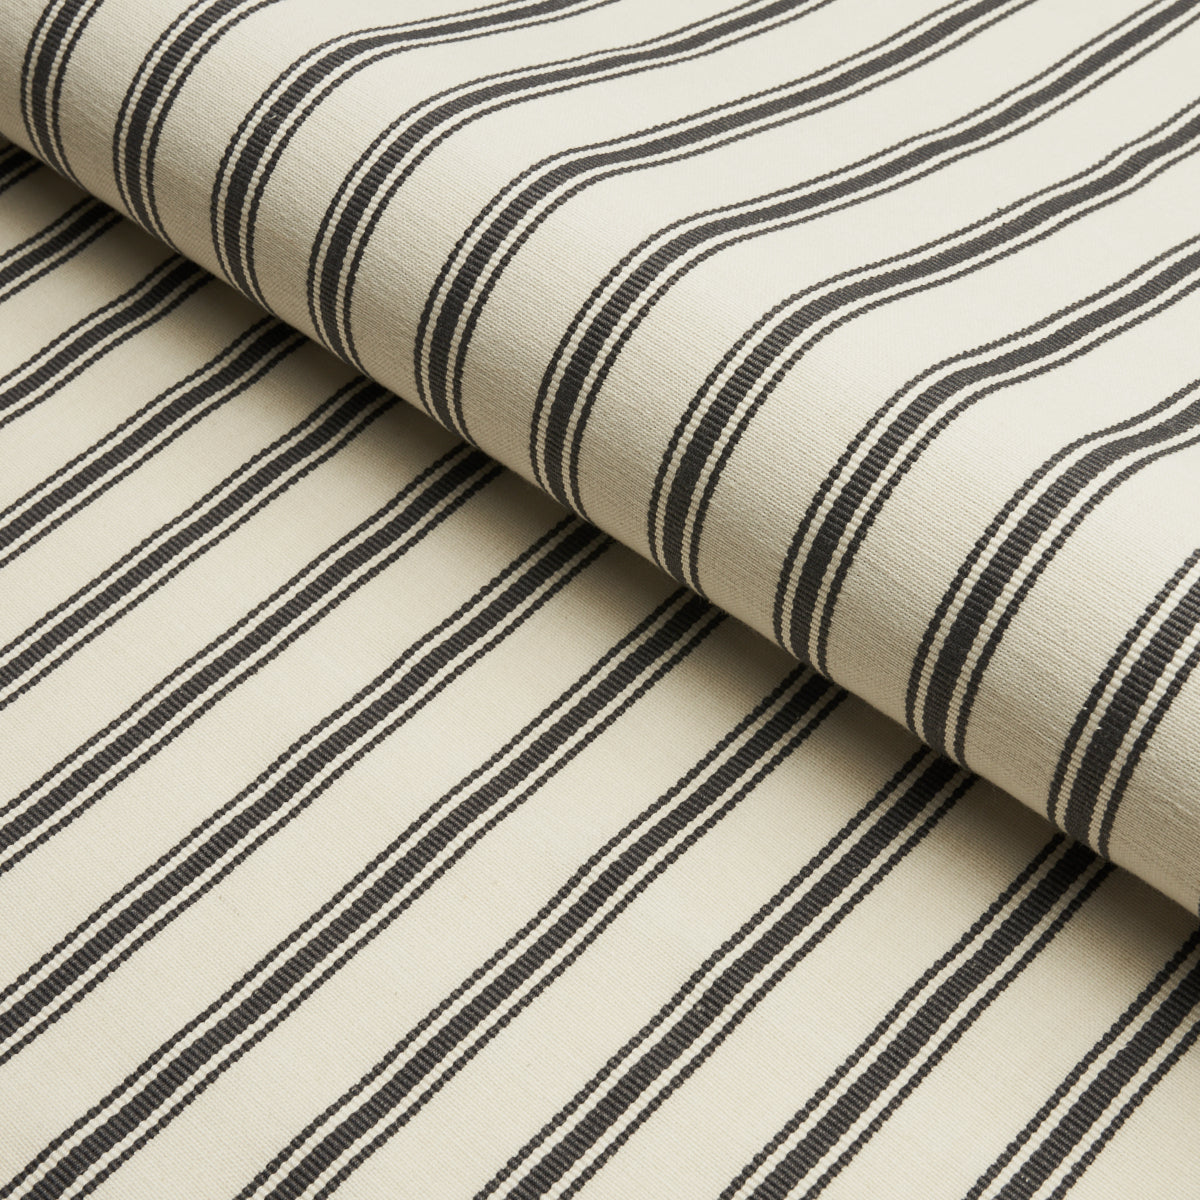 Purchase 82201 | Azulejos, Carbon - Schumacher Fabric